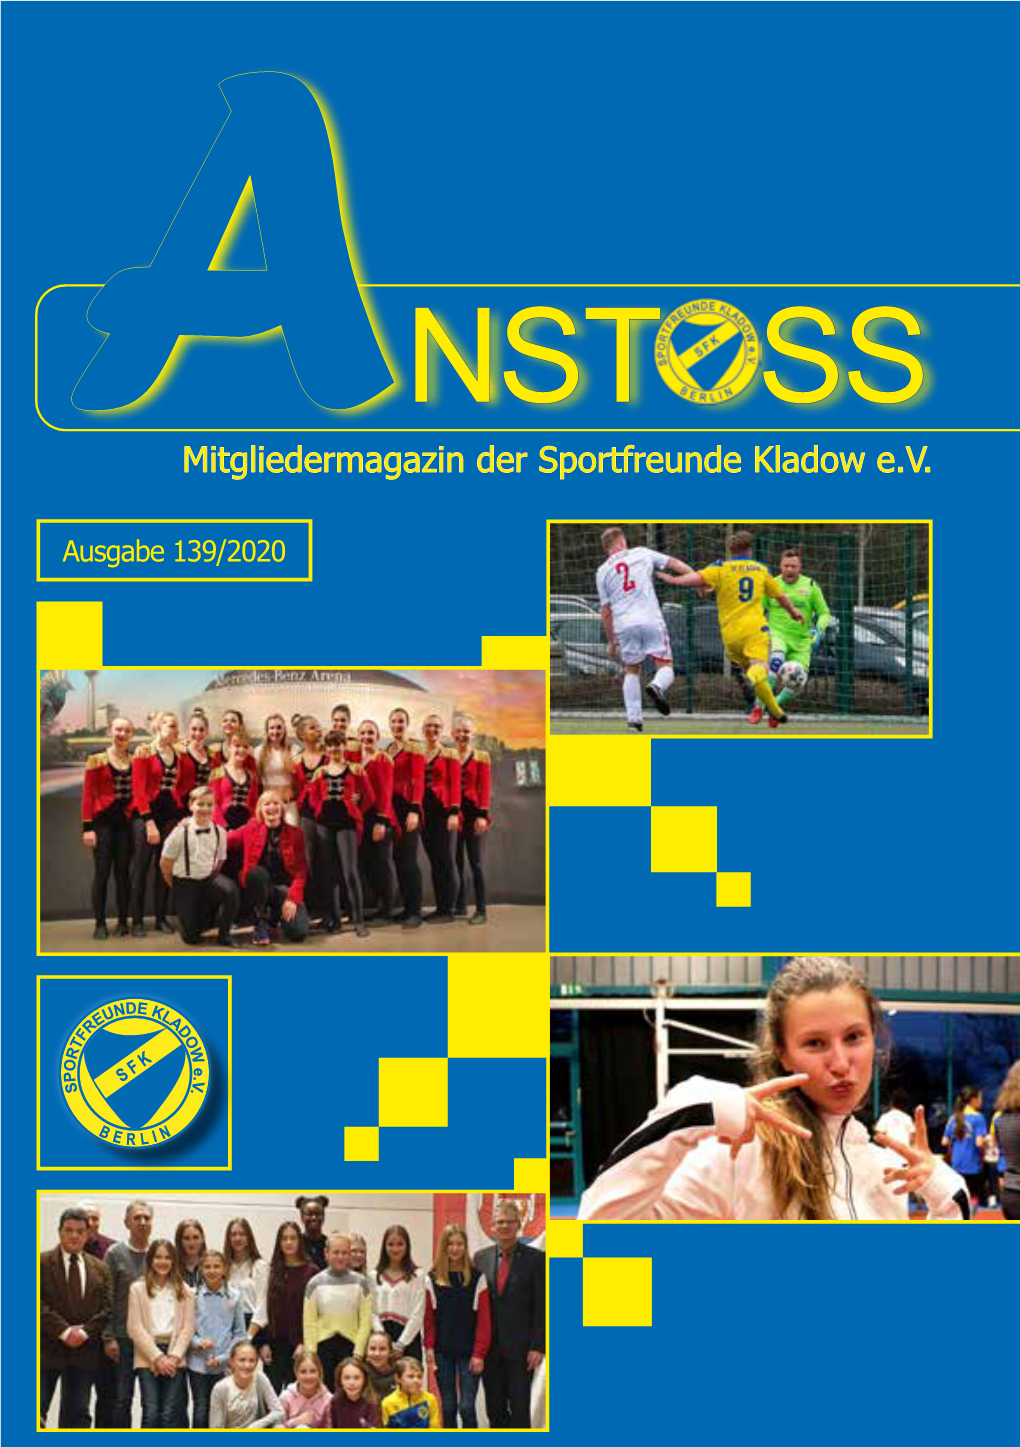 NSTOSS Amitgliedermagazin Der Sportfreunde Kladow E.V